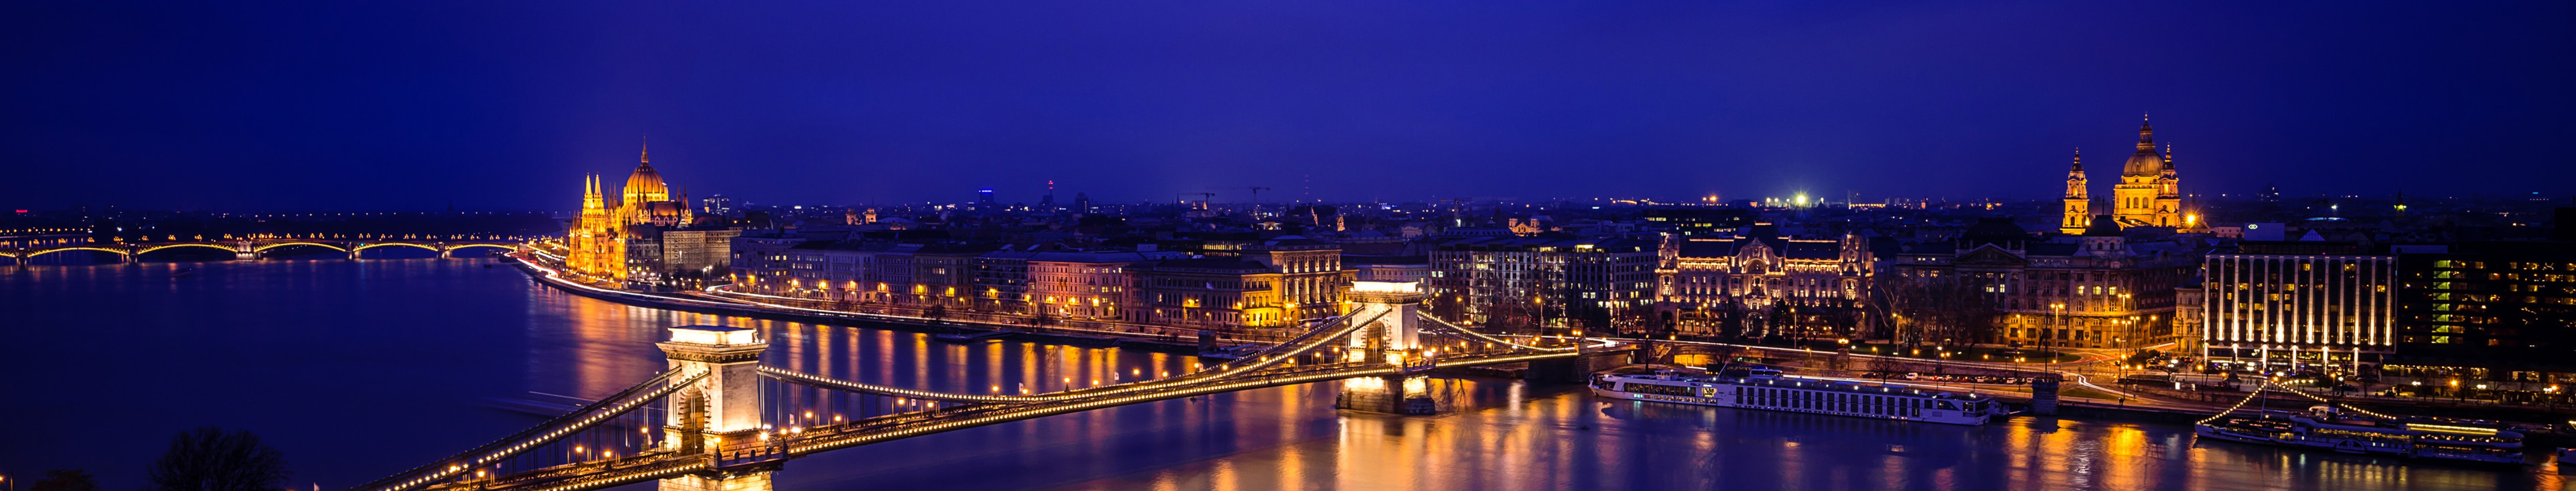 General 5670x1080 Budapest Hungarian Parliament Building Chain Bridge river city night Hungary cityscape city lights bridge